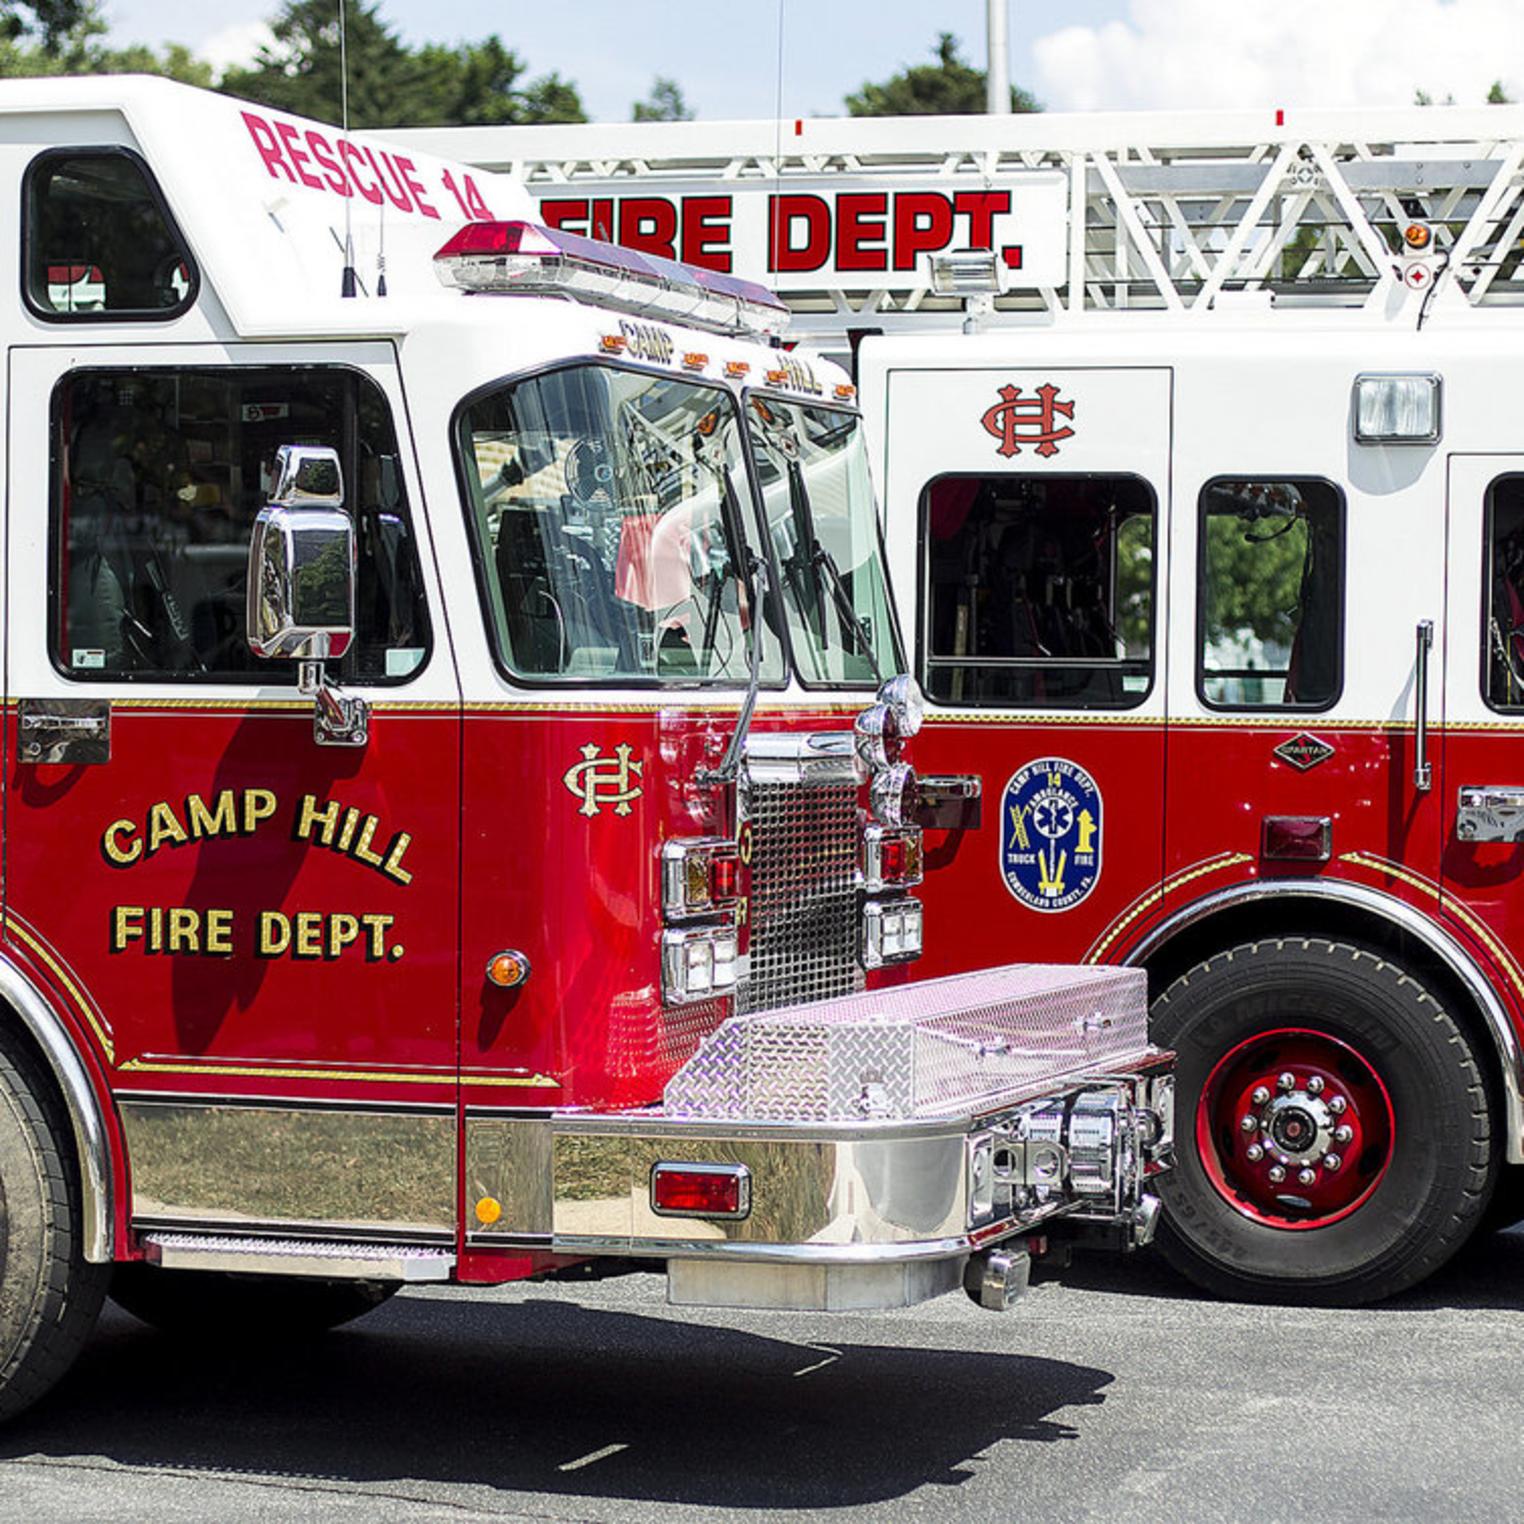 Camp Hill Fire Department